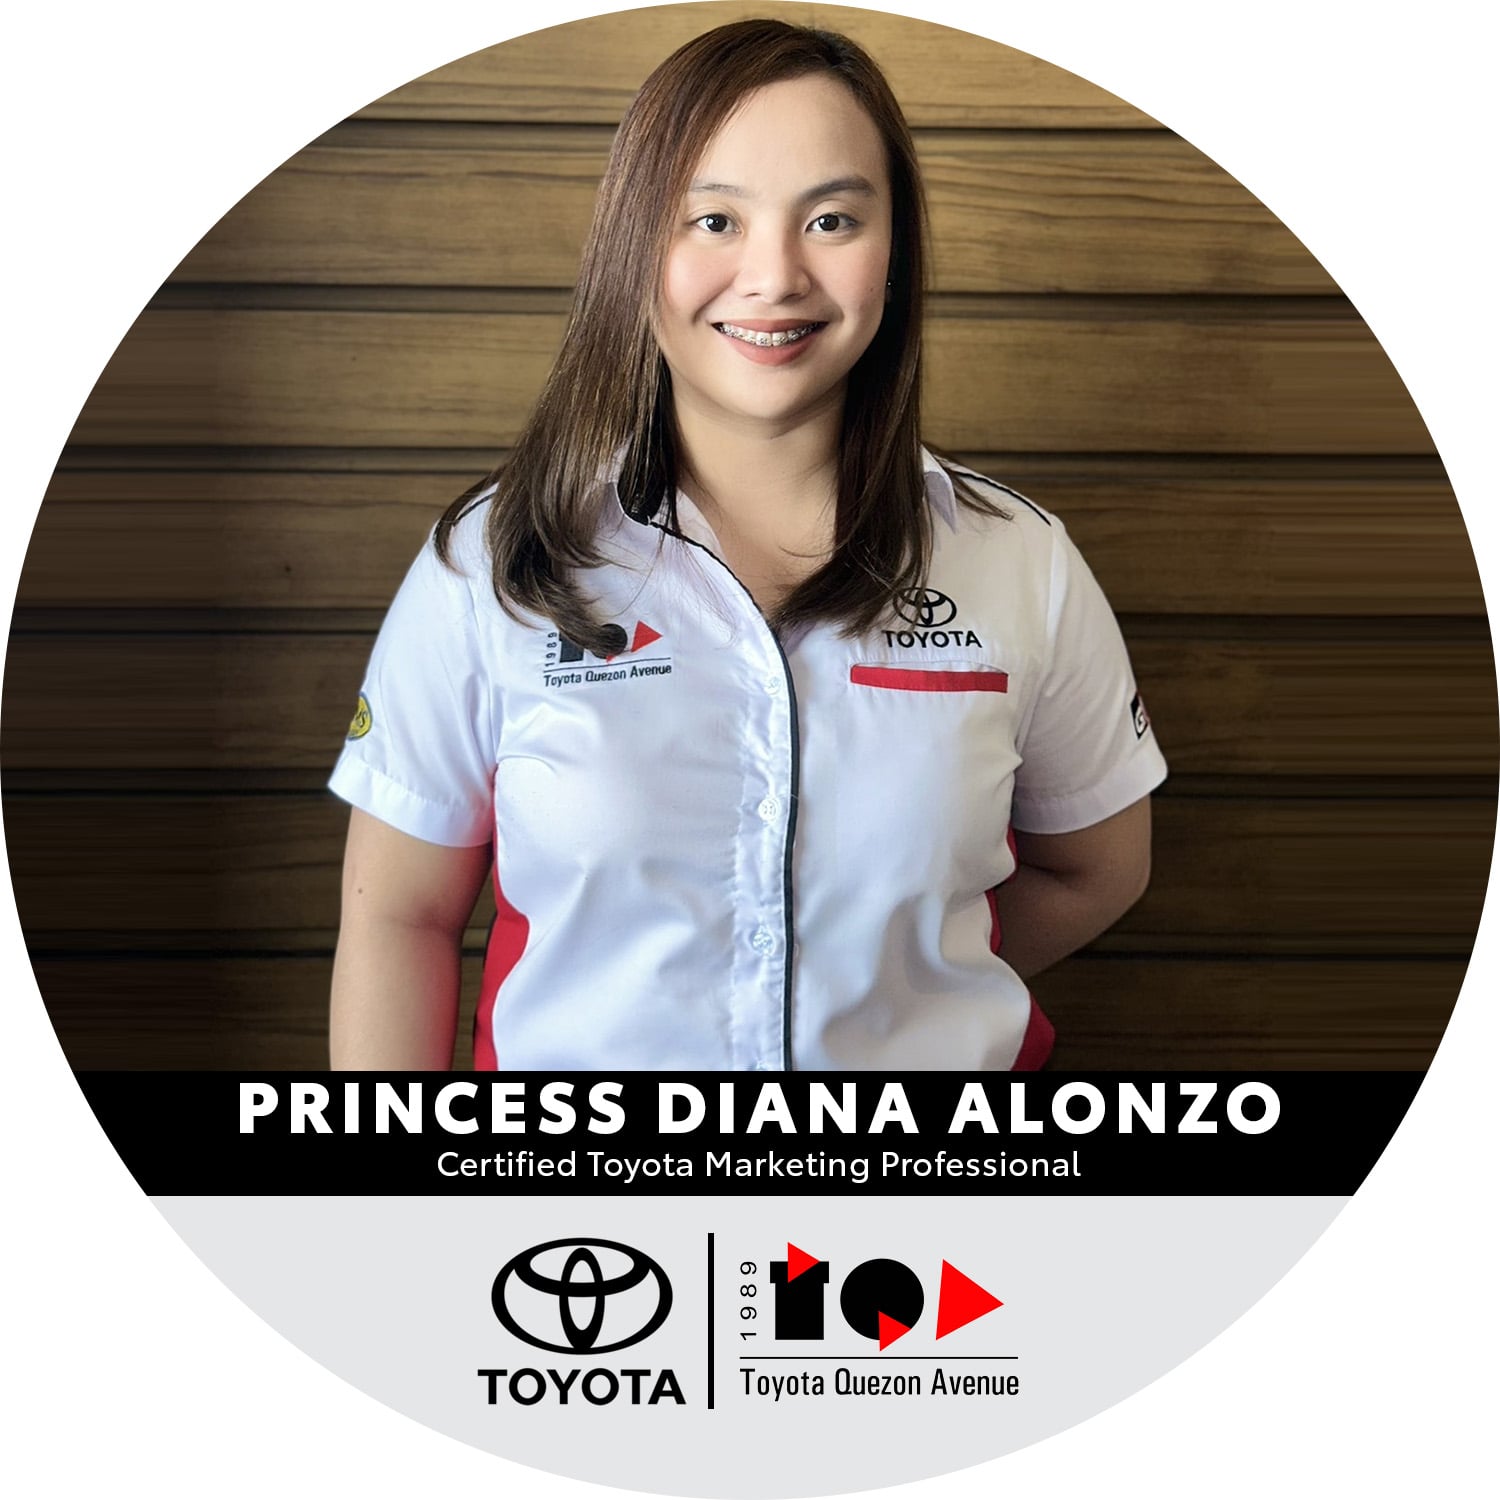 Certified Toyota Marketing Professionals - Princess Diana Alonzo